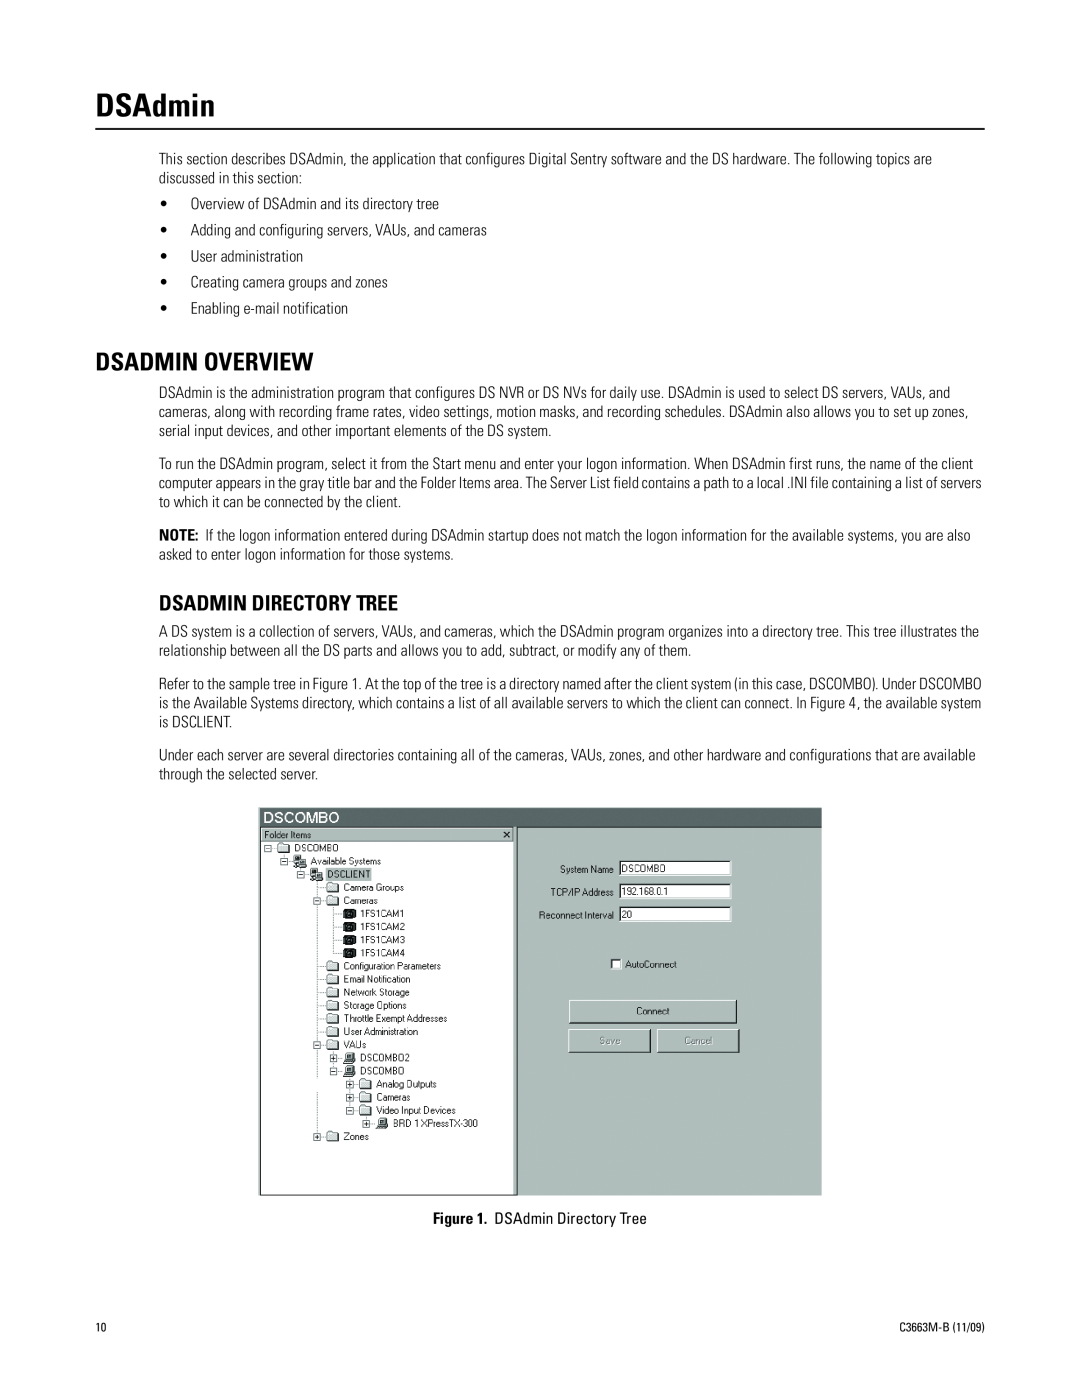 Pelco DS NVS manual DSAdmin, Dsadmin Overview, Dsadmin Directory Tree 